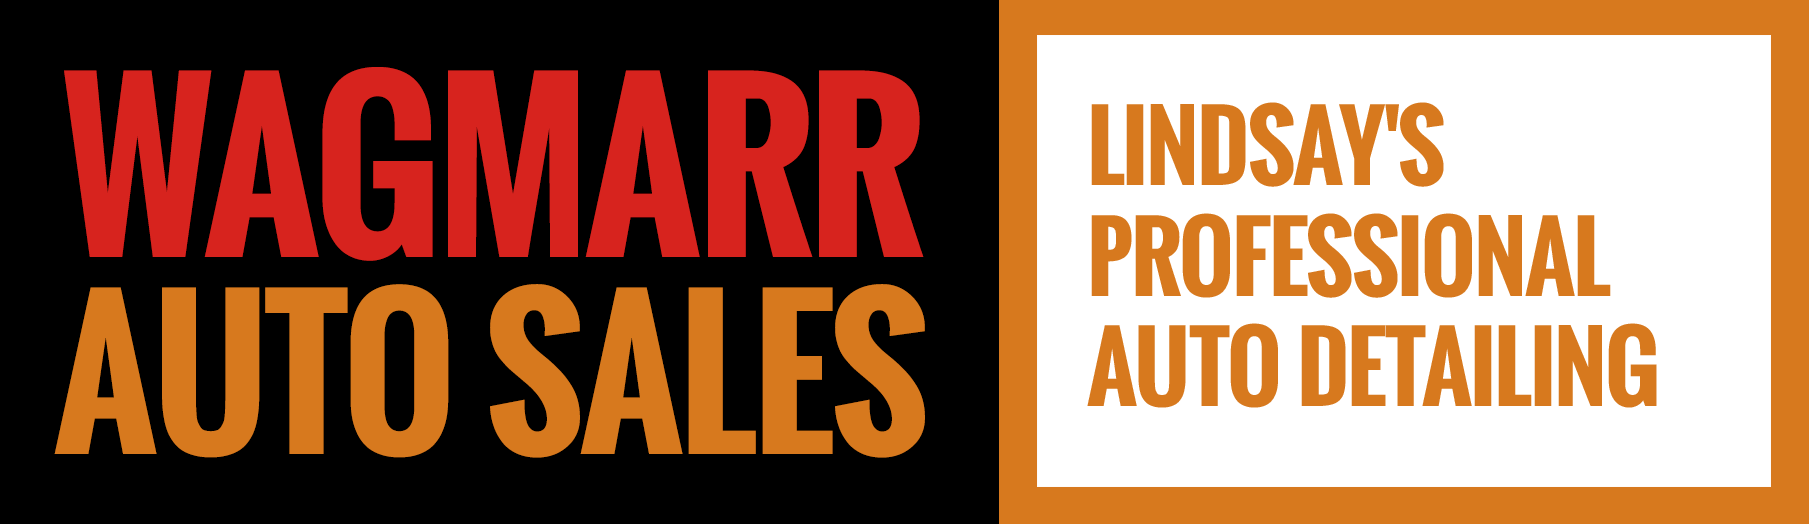 Wagmarr Auto Sales logo